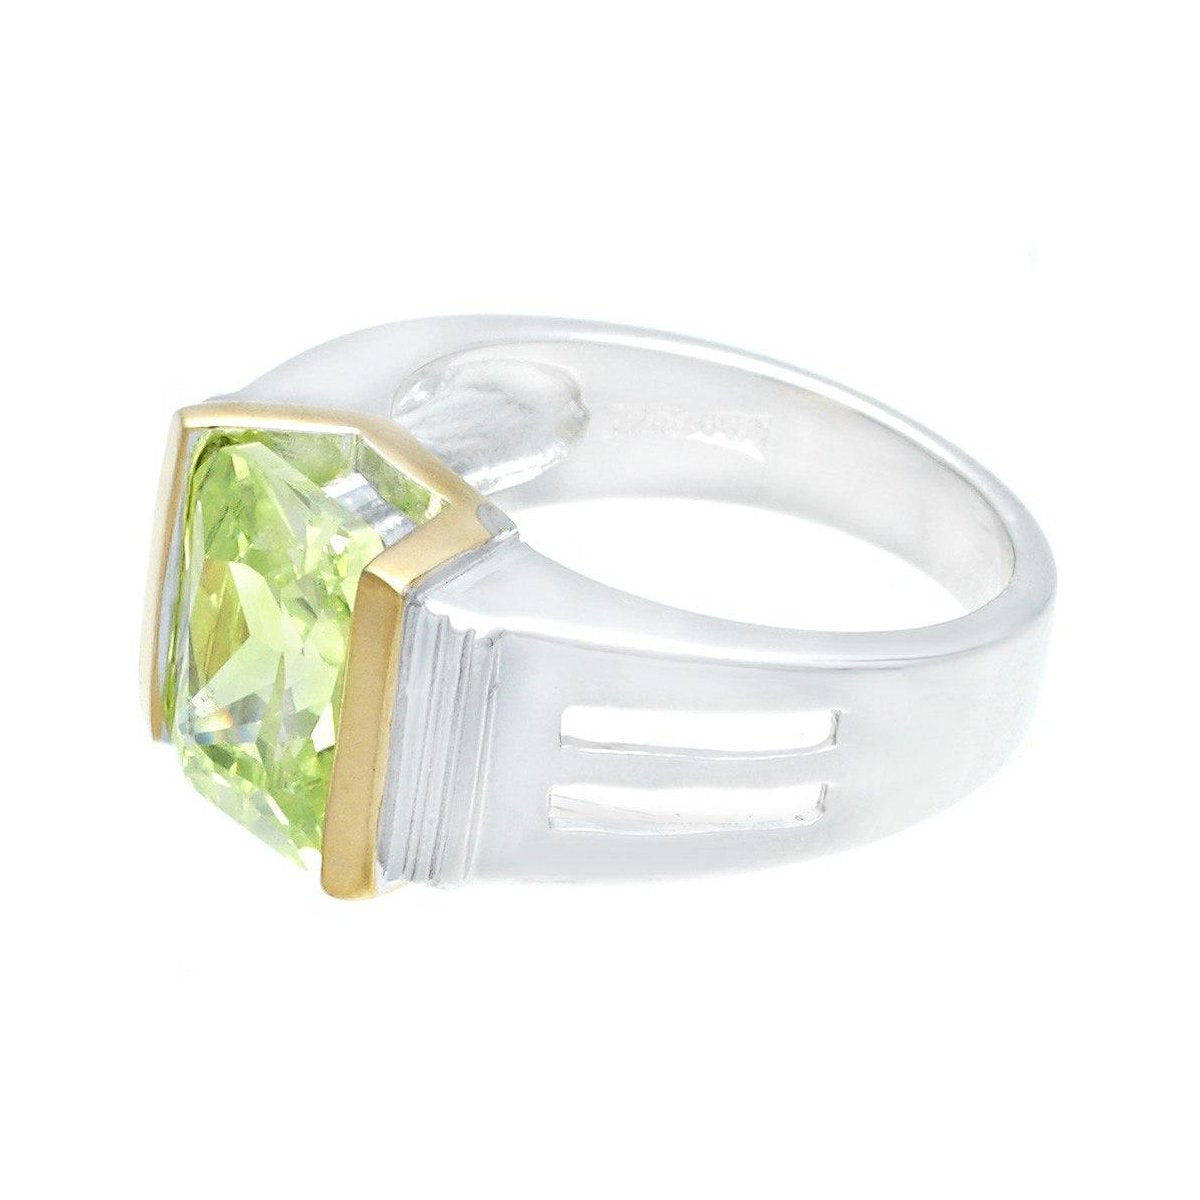 Emerald-Cut Green Yellow Stone Statement Ring